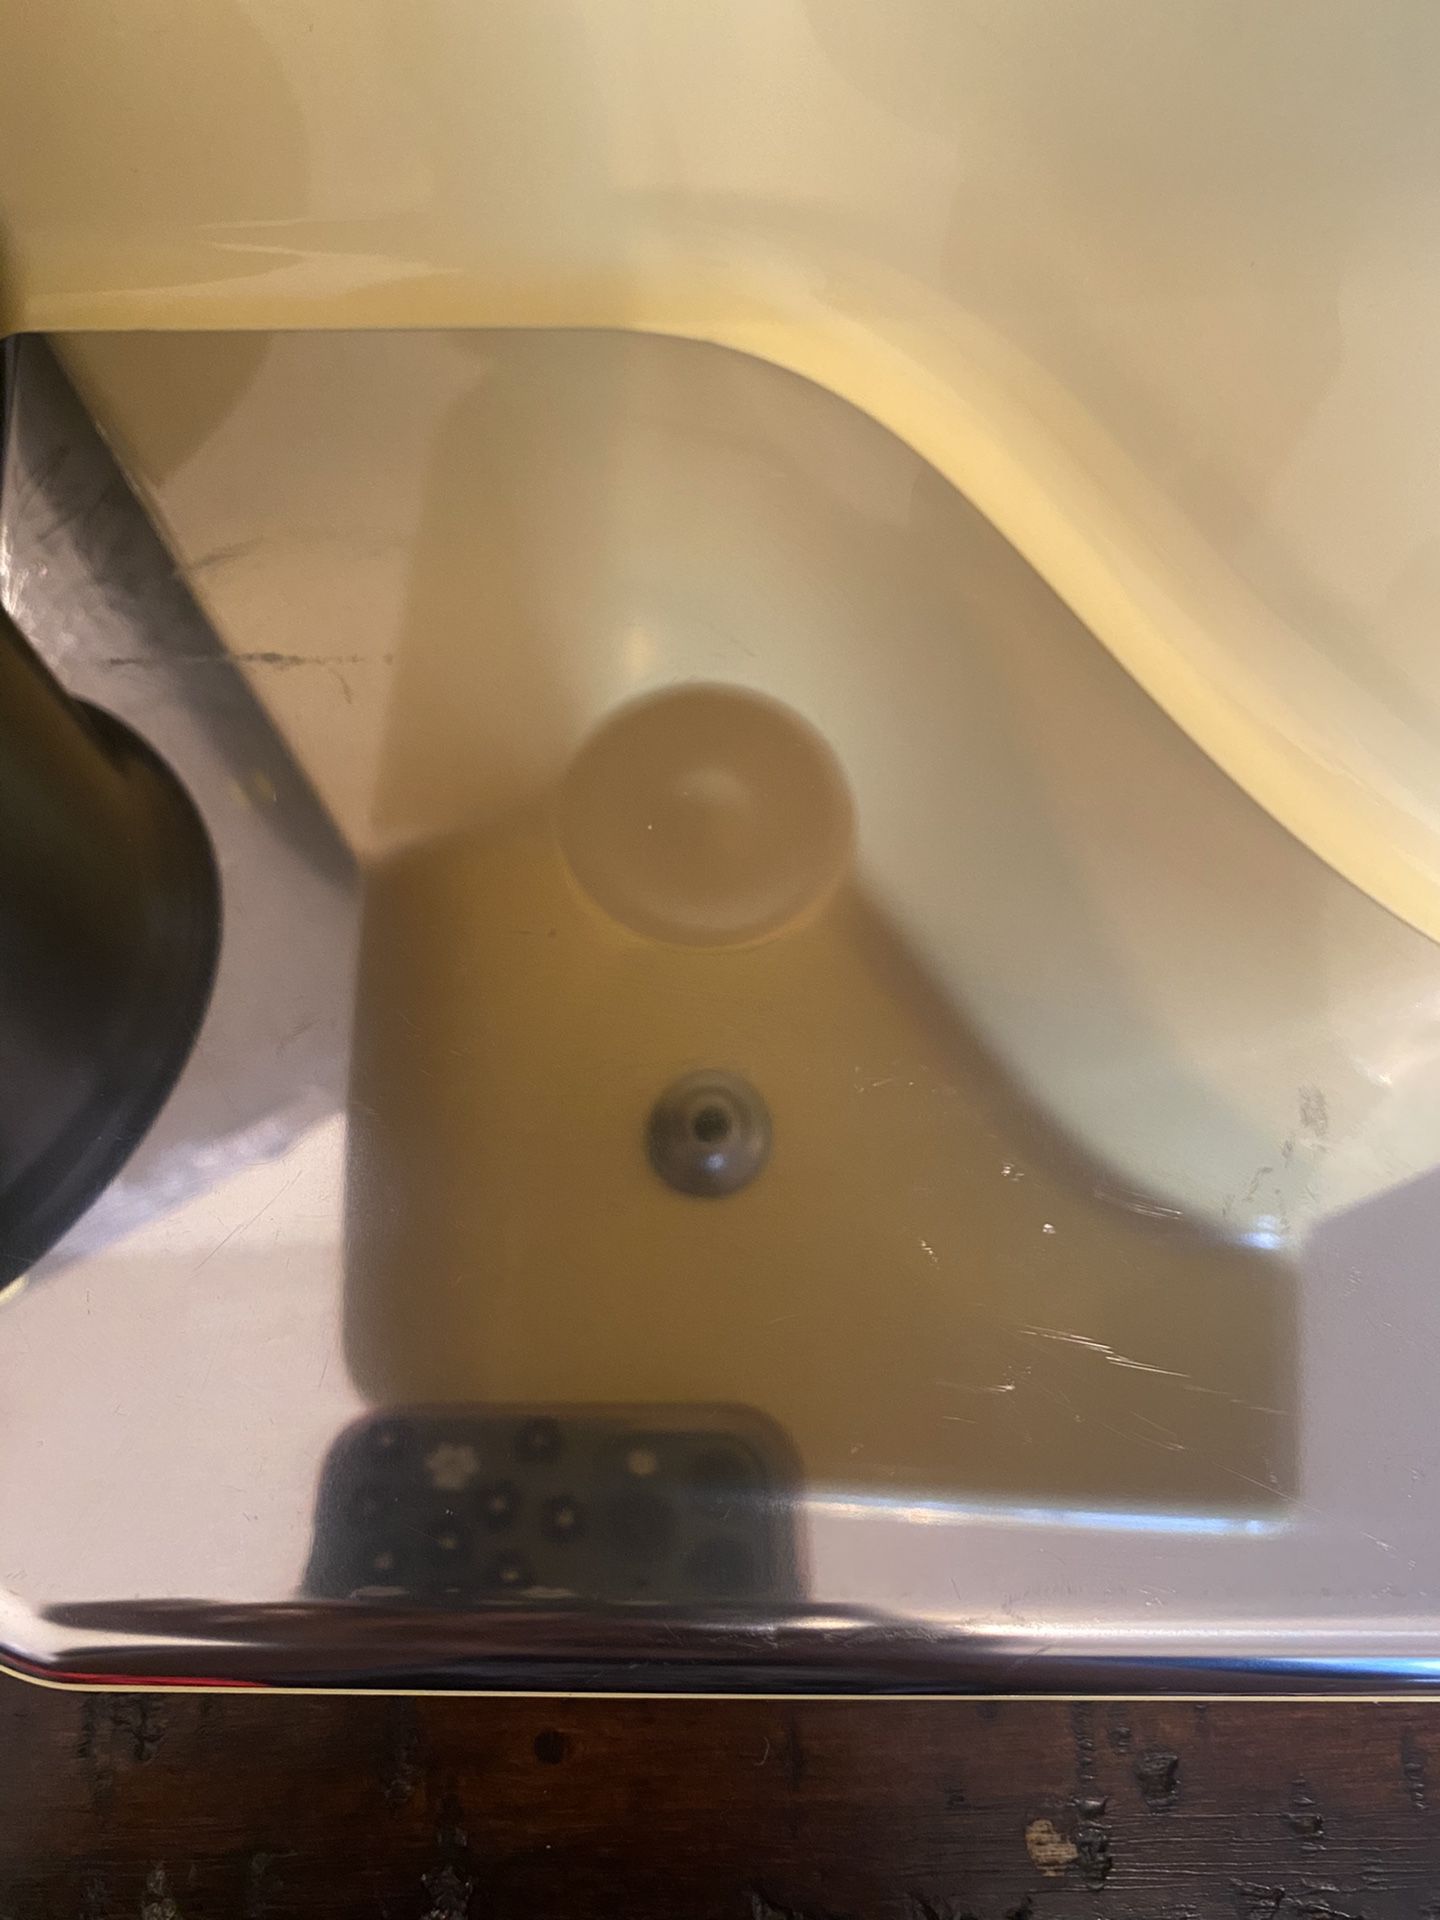 LEVO Gummy Automatic Mixer for Sale in Belleair, FL - OfferUp